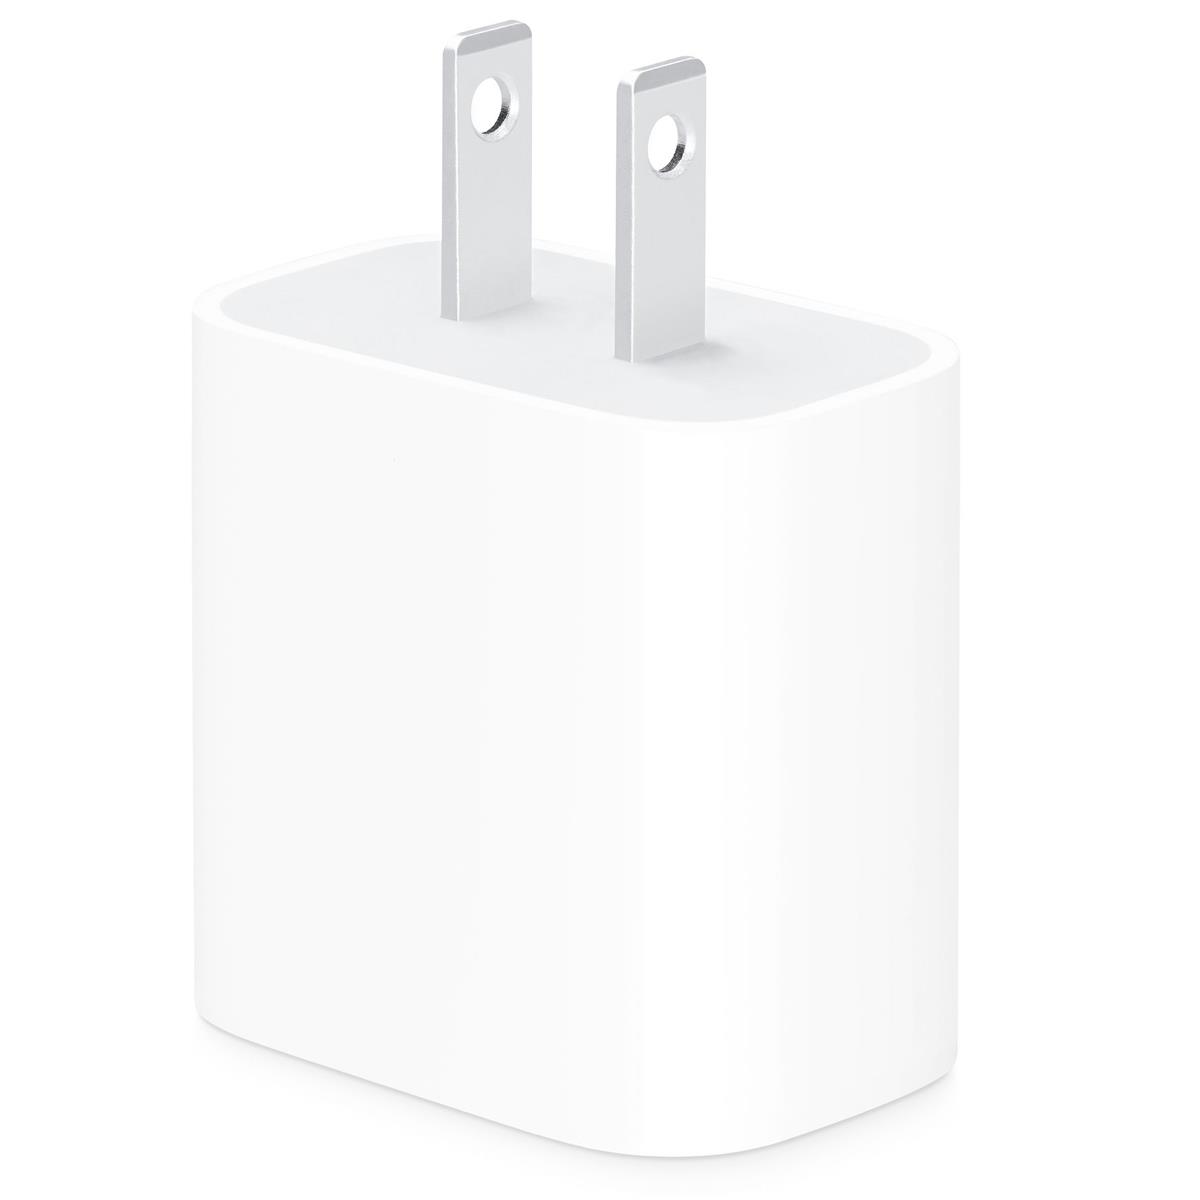 Image of Apple 20W USB-C Power Adapter